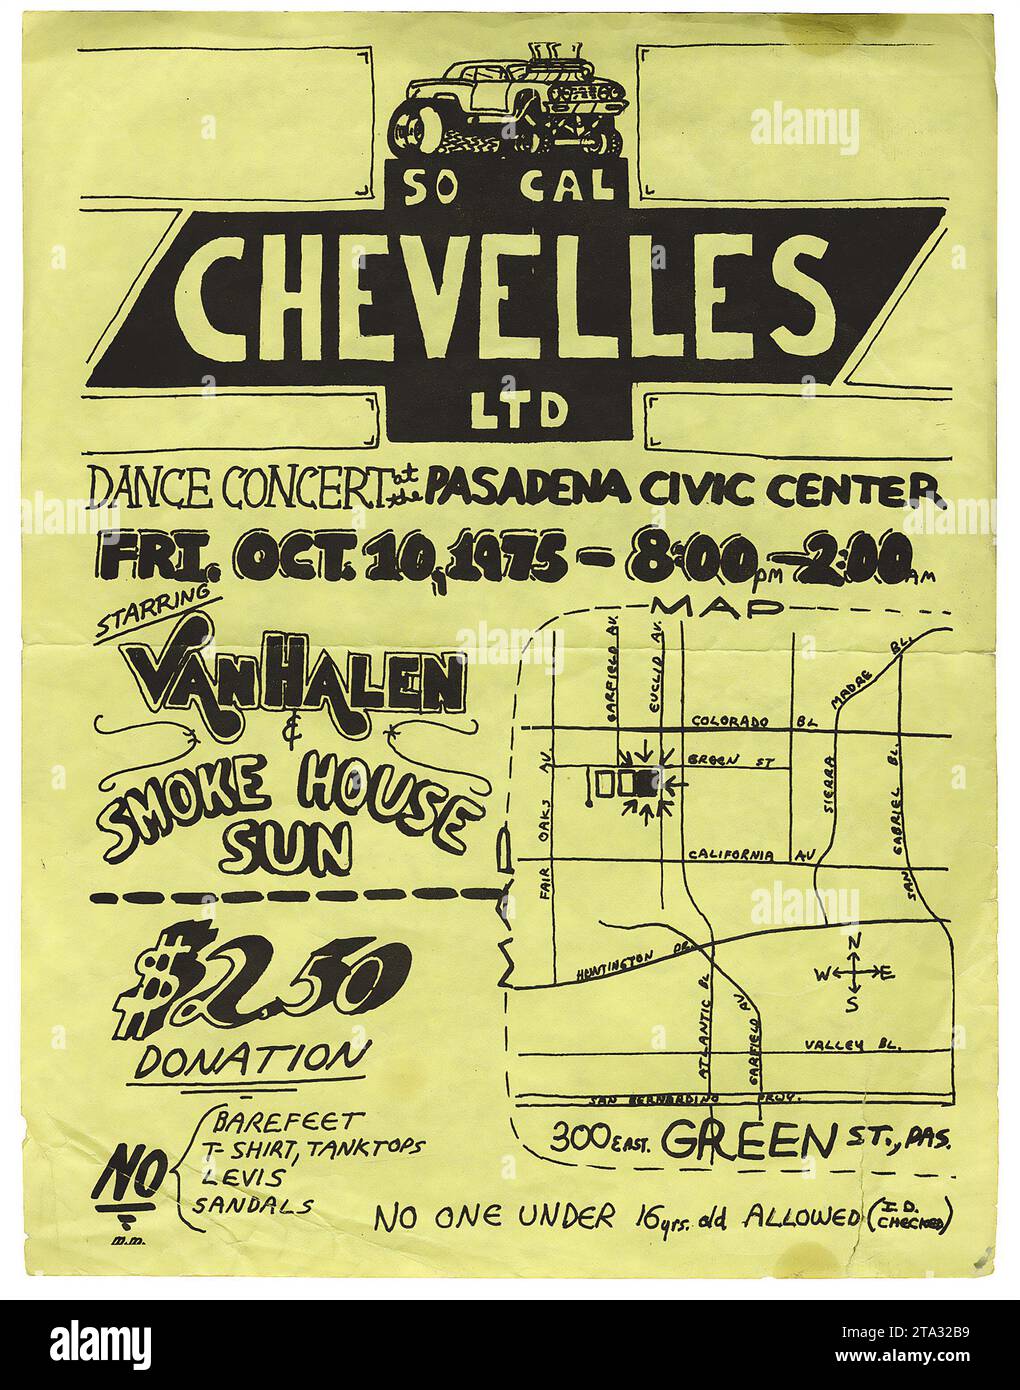 Van Halen, concert de danse 'Chevelles LTDd' Pasadena Civic Center - Smoke House Sun - concert Handbill (1975). Banque D'Images